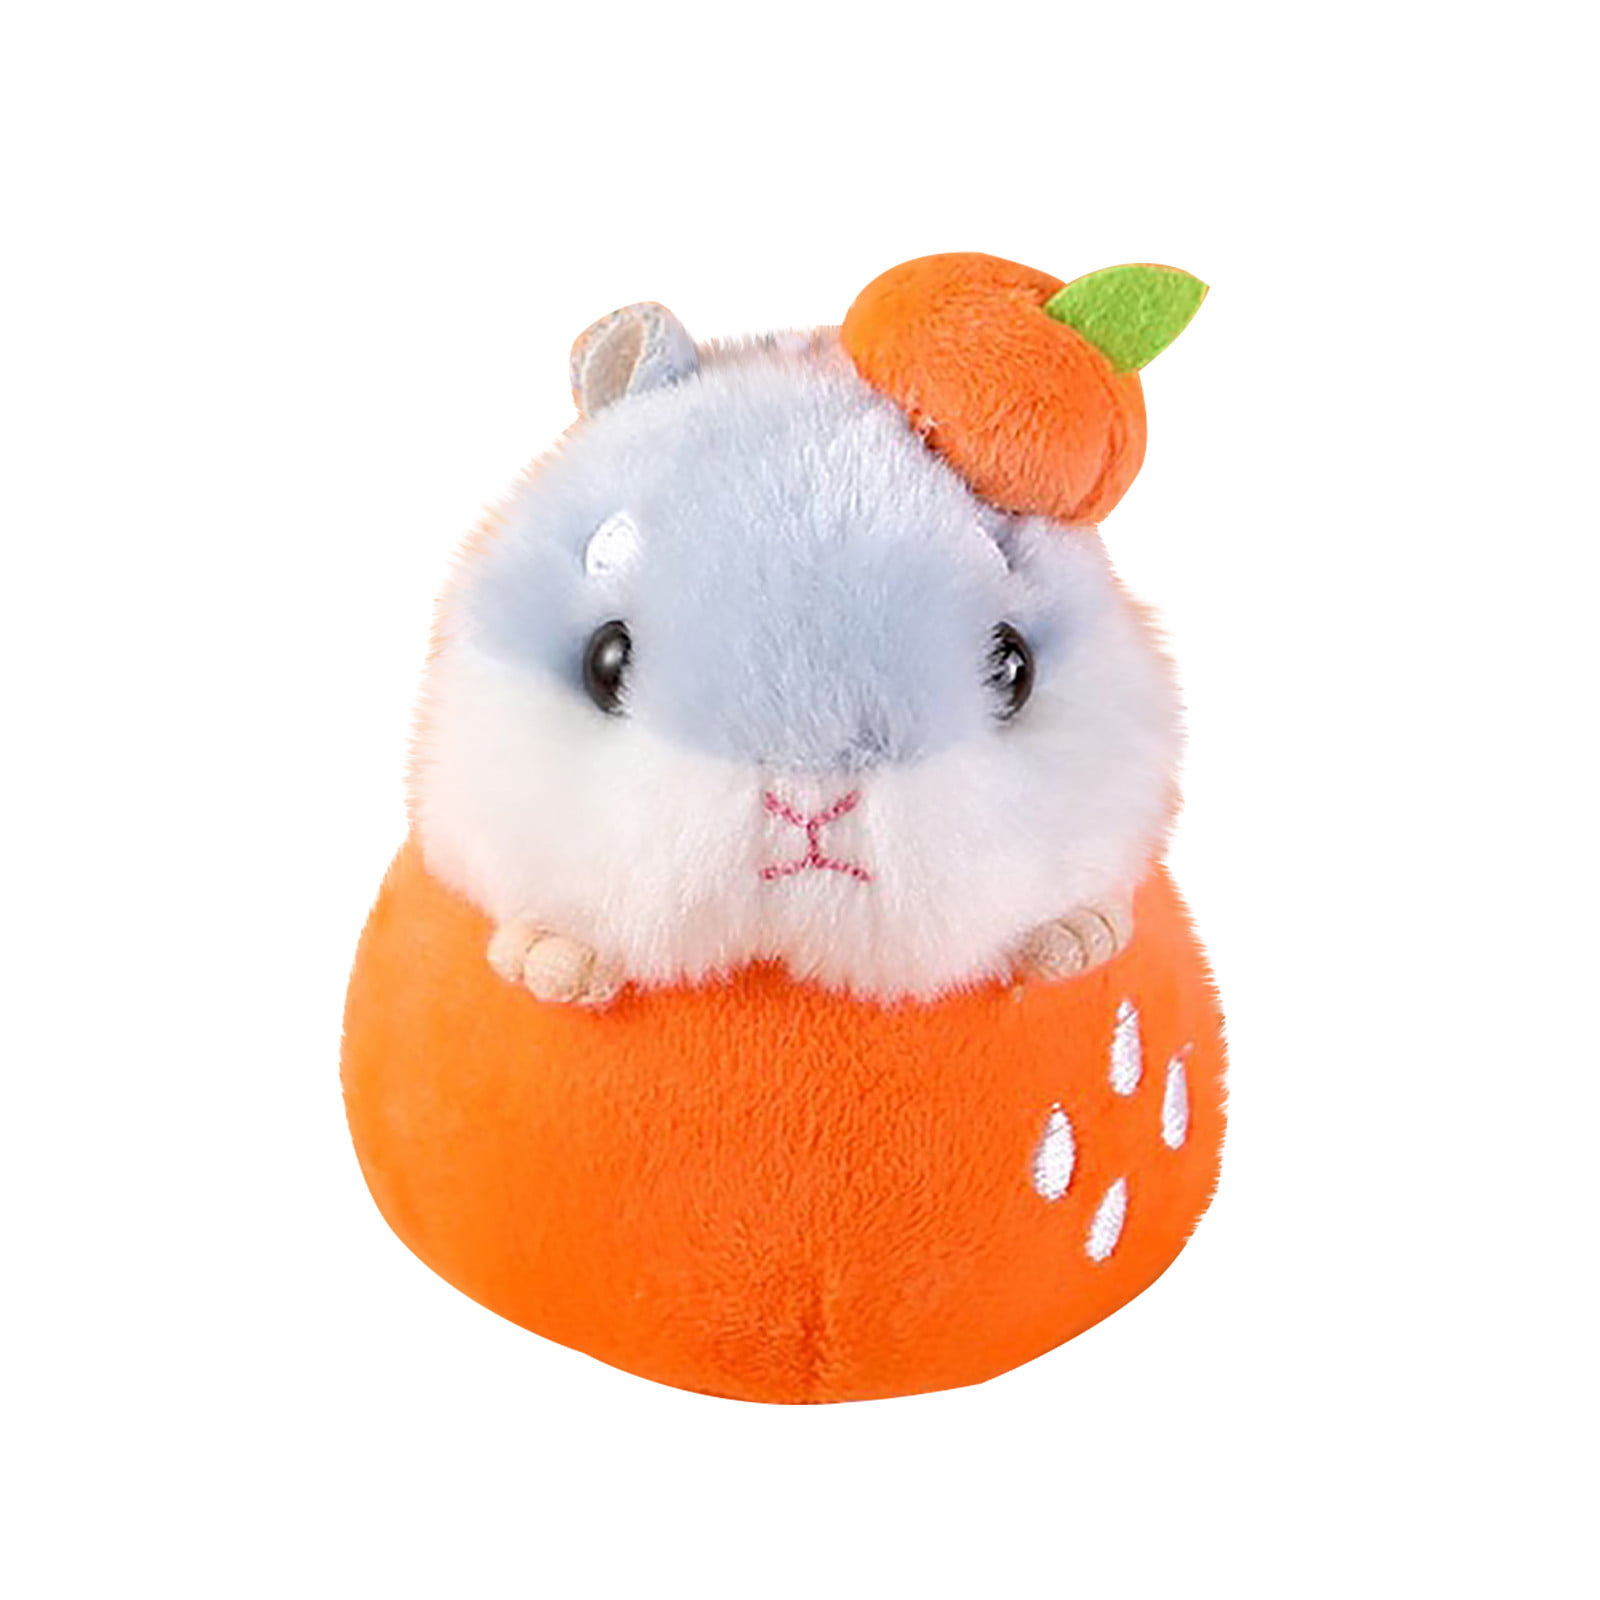 Hamster Plush Stuffed Animal Toy Keychain Blue 3.5" US Seller 